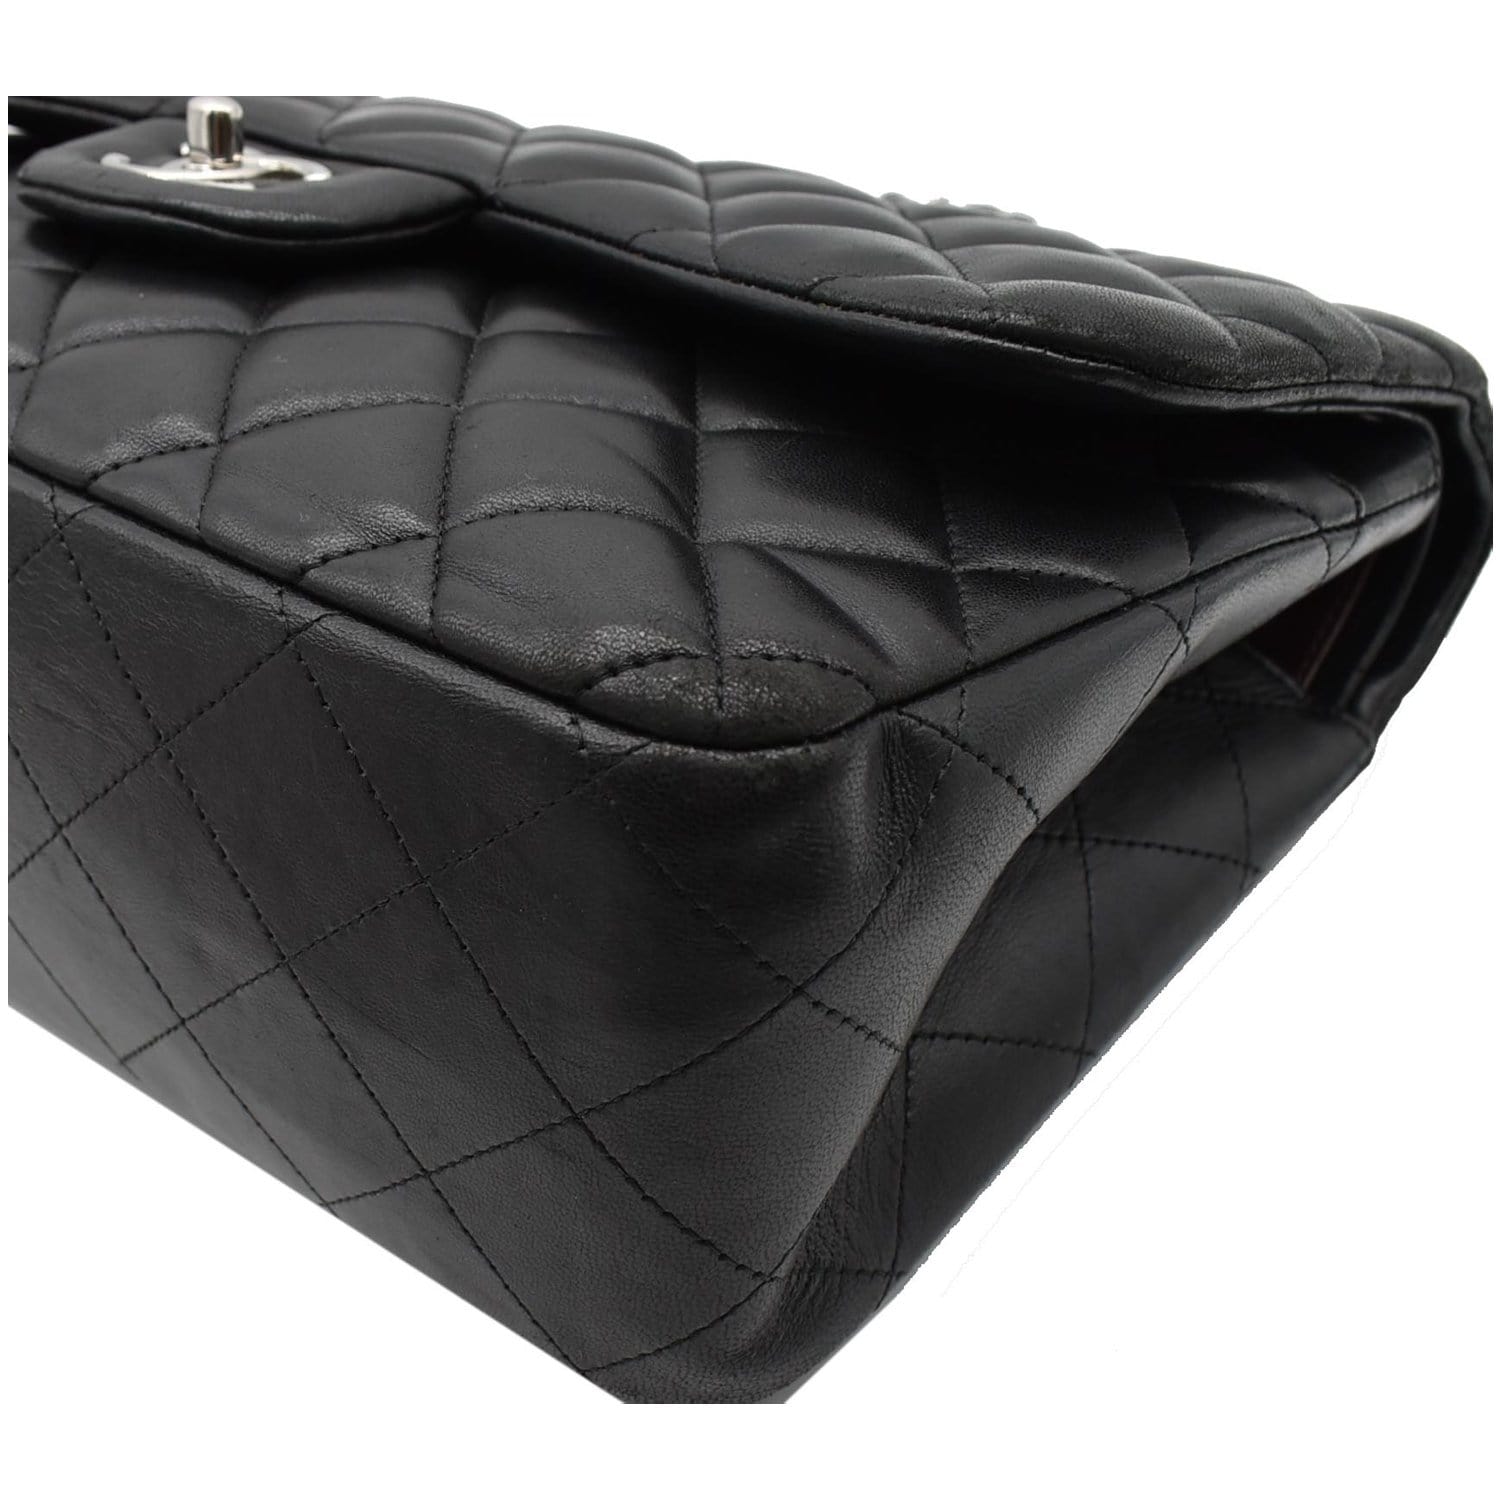 CHANEL Jumbo Double Flap Lambskin Leather Shoulder Bag Black